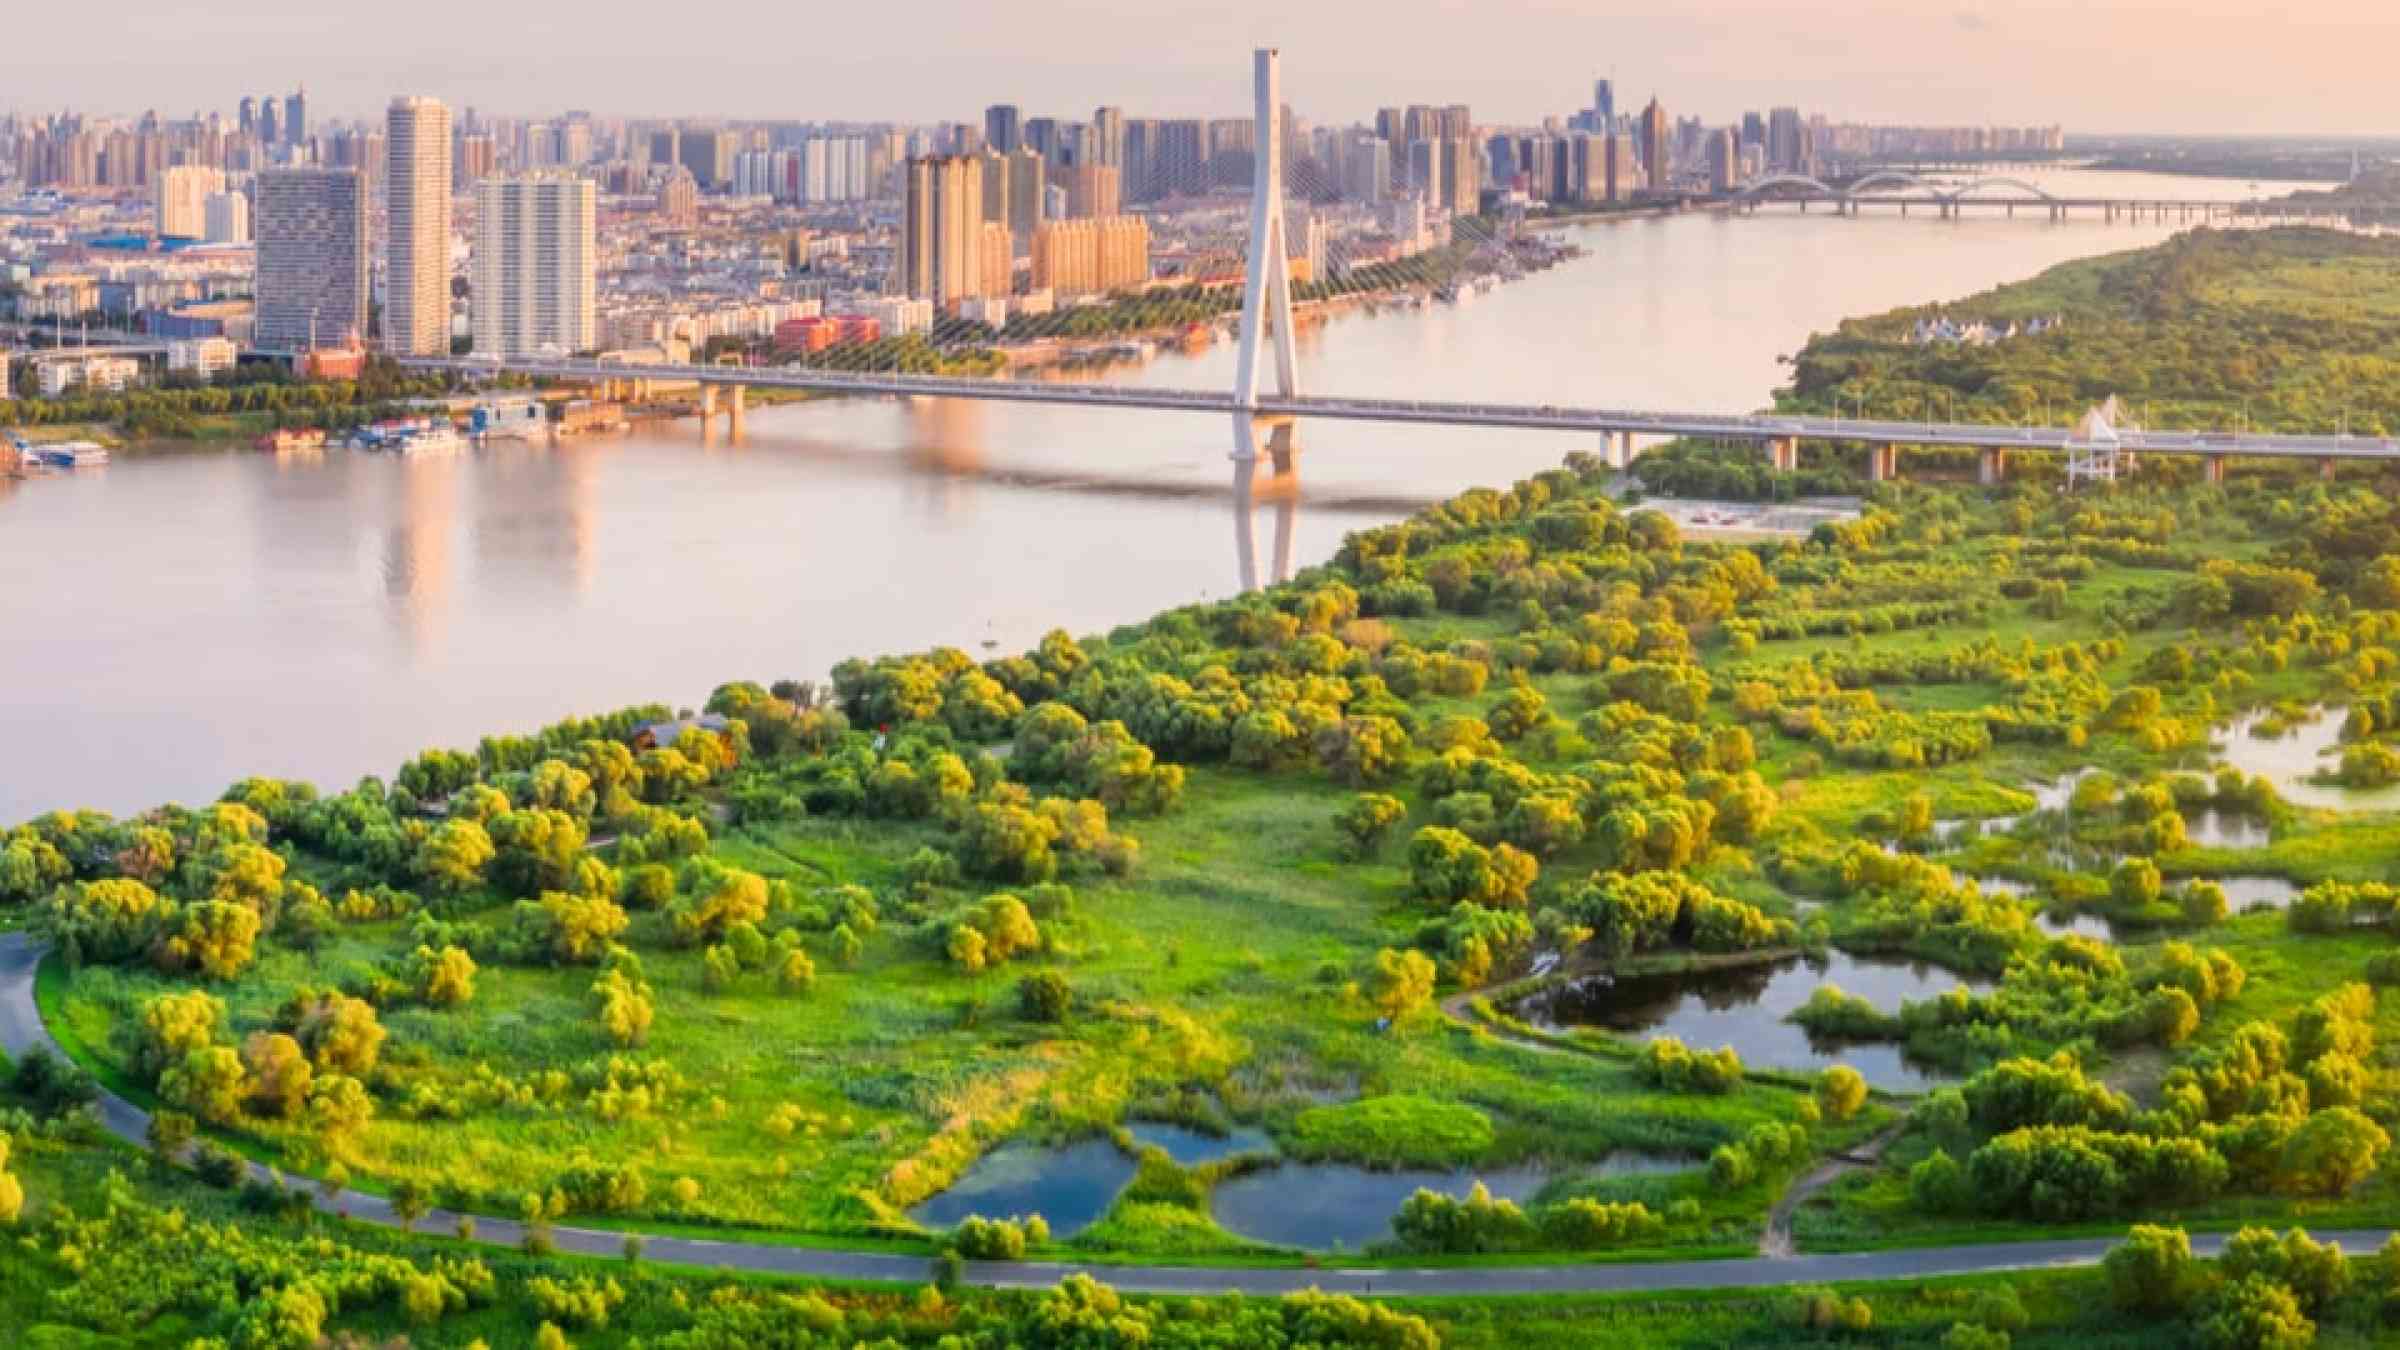 Wetland of the city of Harbin, China